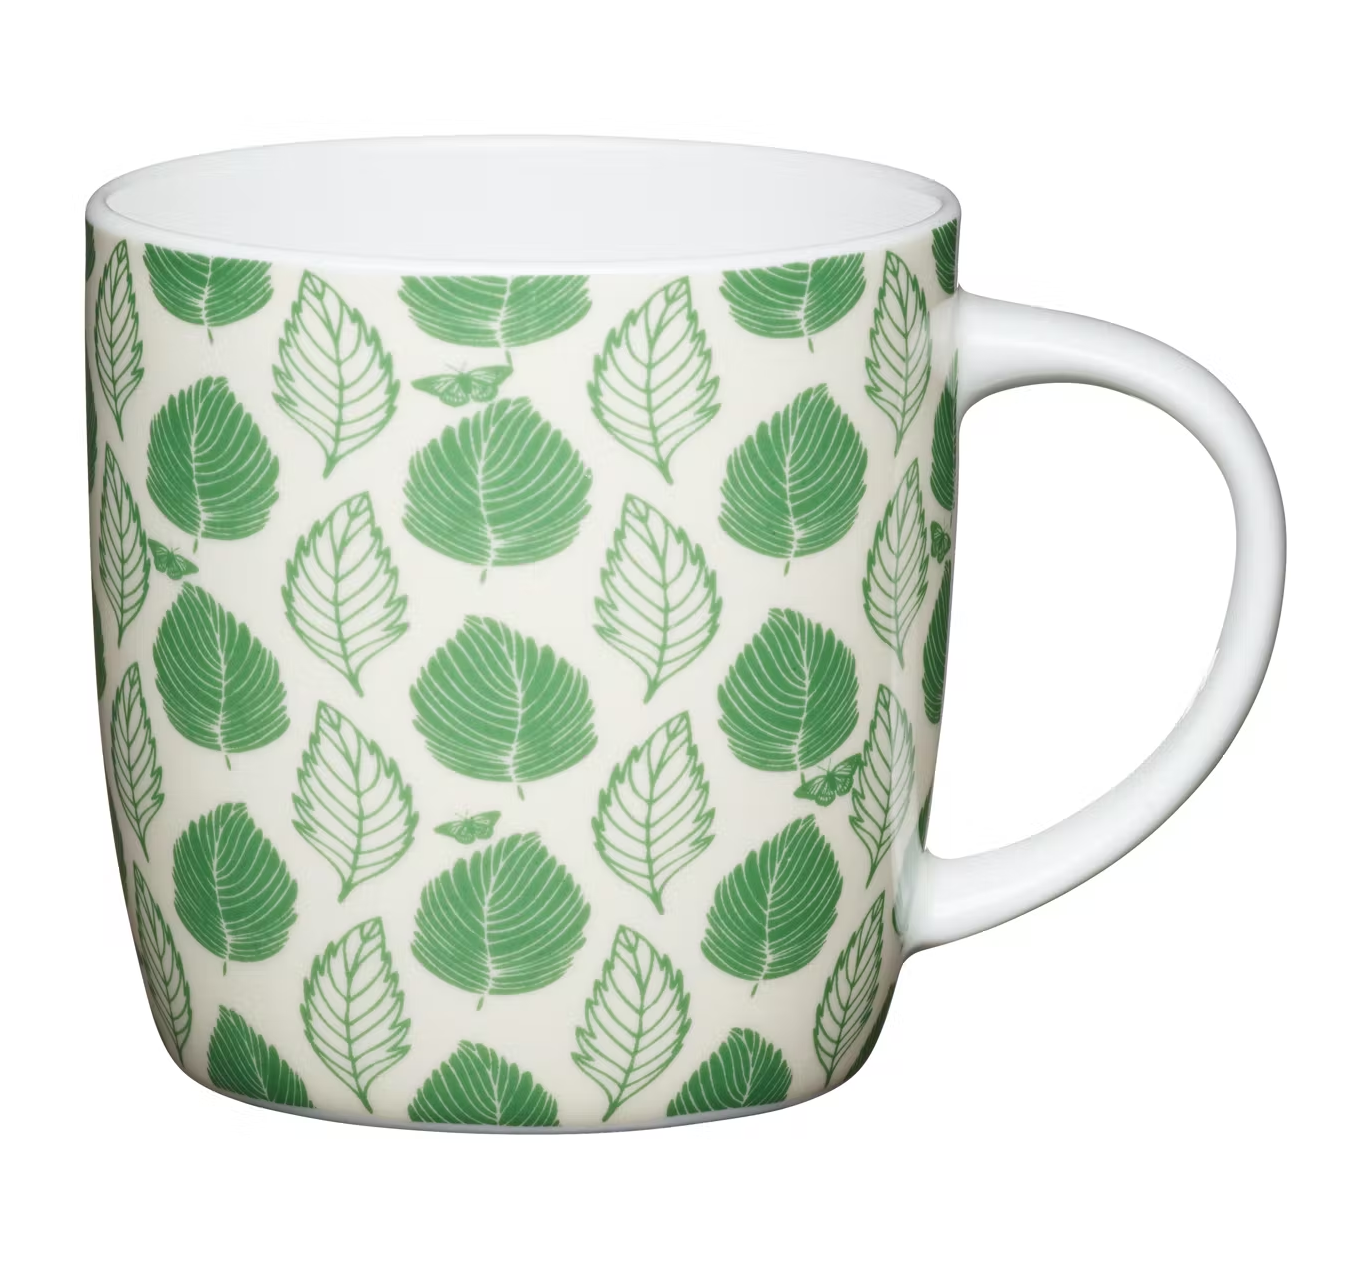 KitchenCraft Green Leaf China Mug with Greenery Print Design